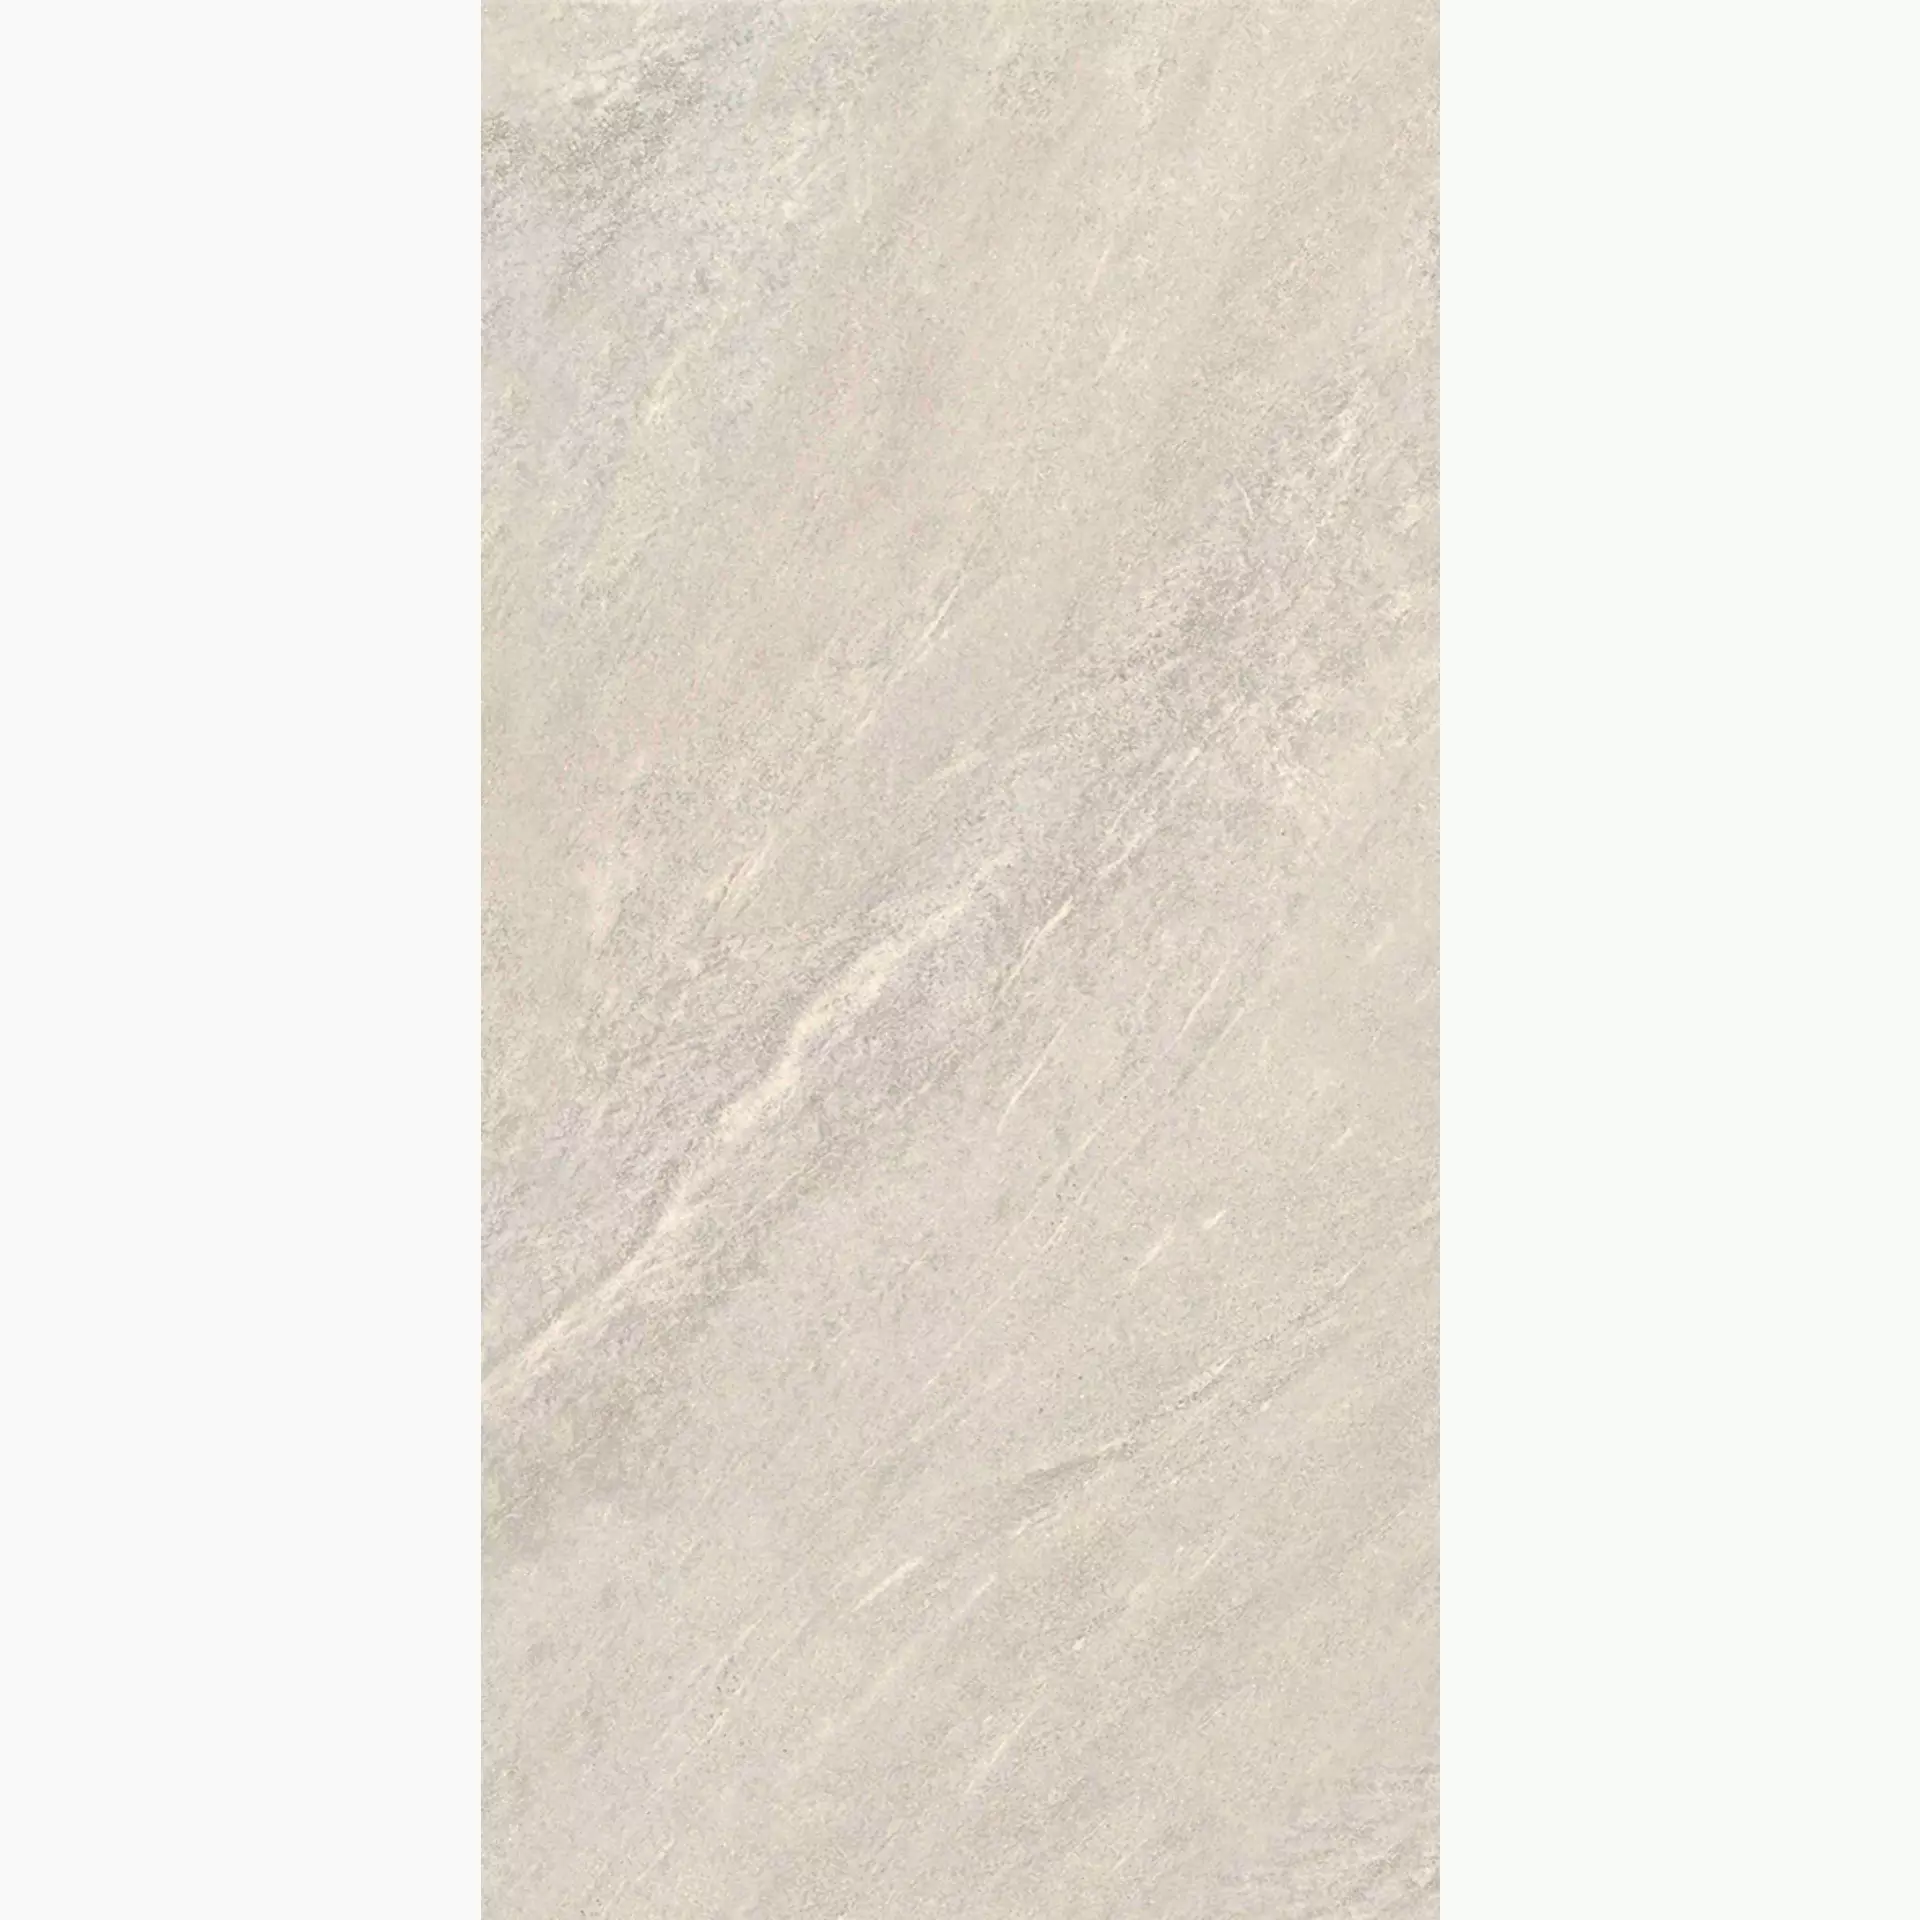 Dado Ceramica Aspen Bianco Naturale Bianco 8TB335 natur 31x62cm 9mm